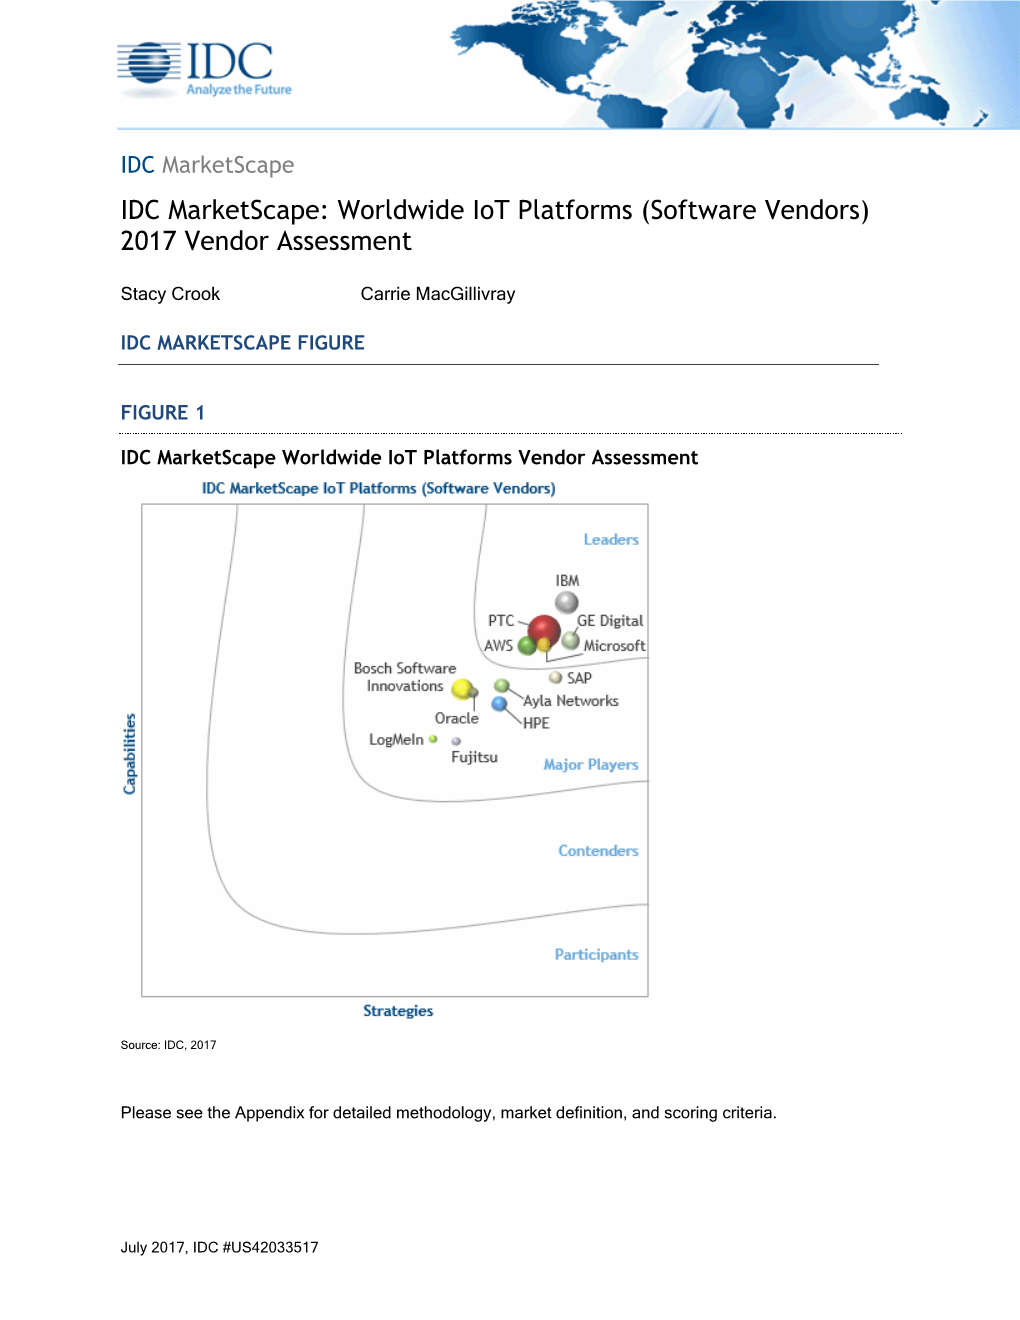 IDC Marketscape: Worldwide Iot Platforms (Software Vendors) 2017 Vendor Assessment